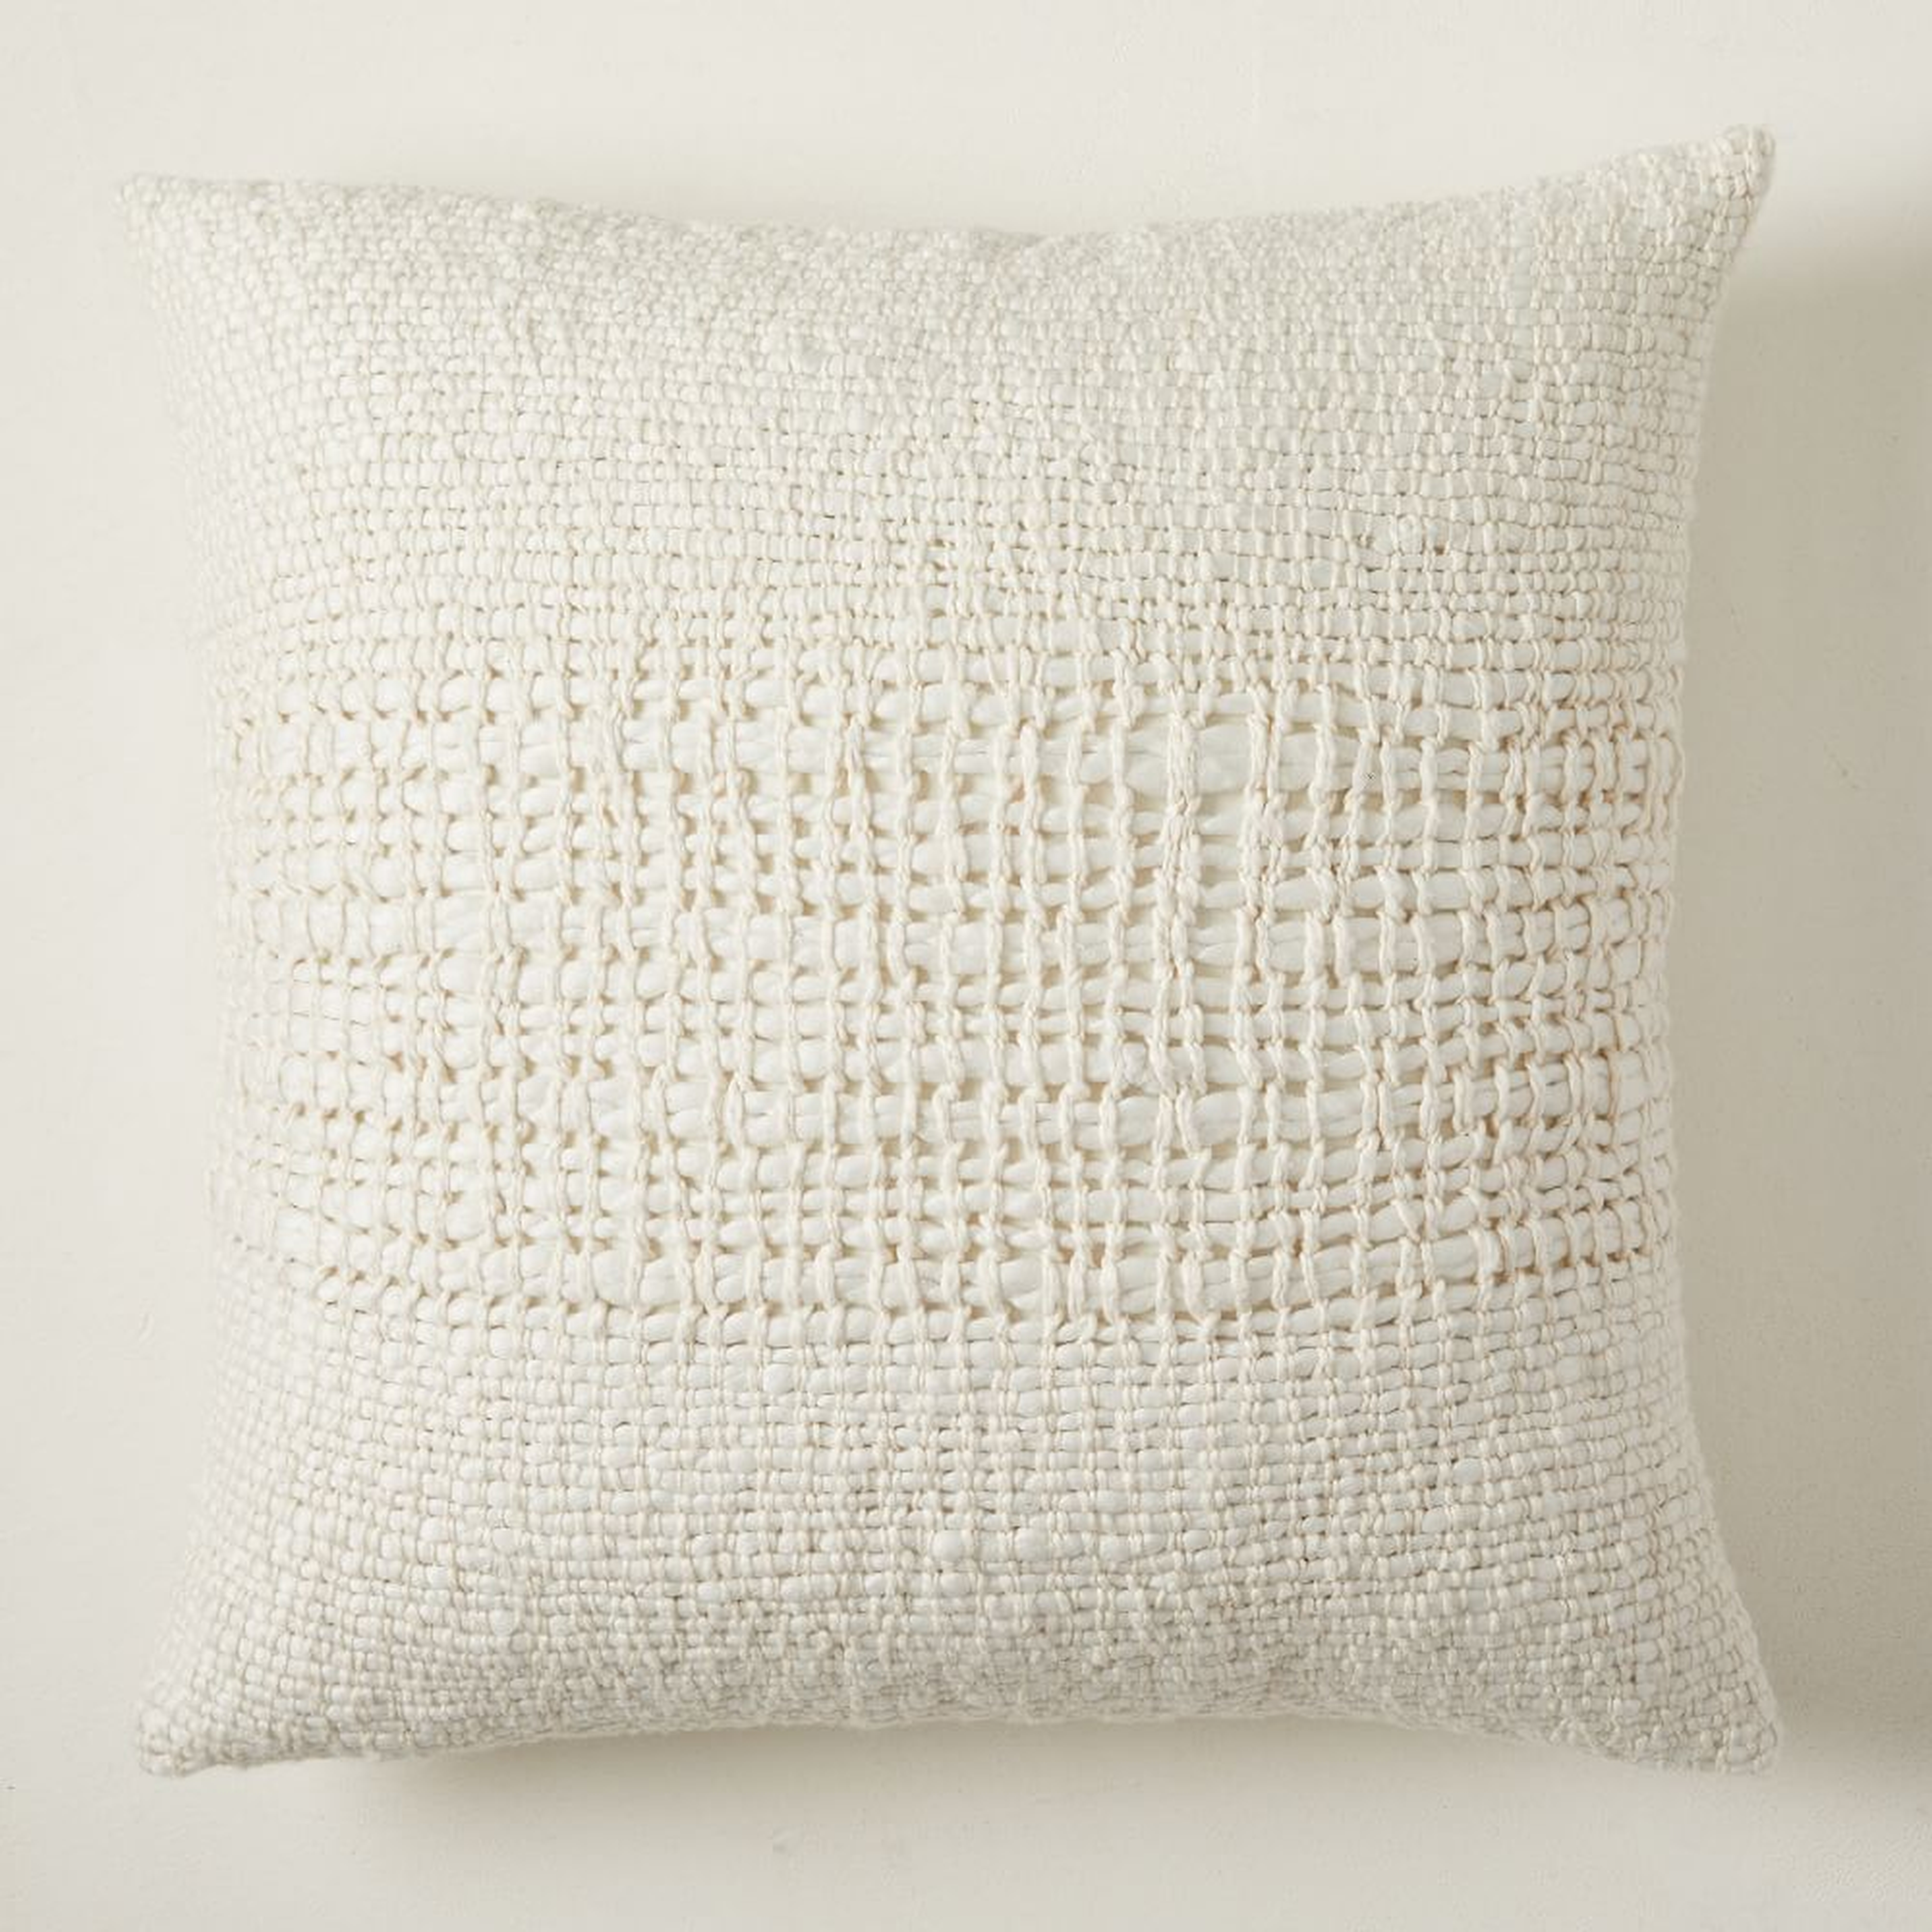 Cozy Weave Pillow Cover, 24"x24", White - West Elm